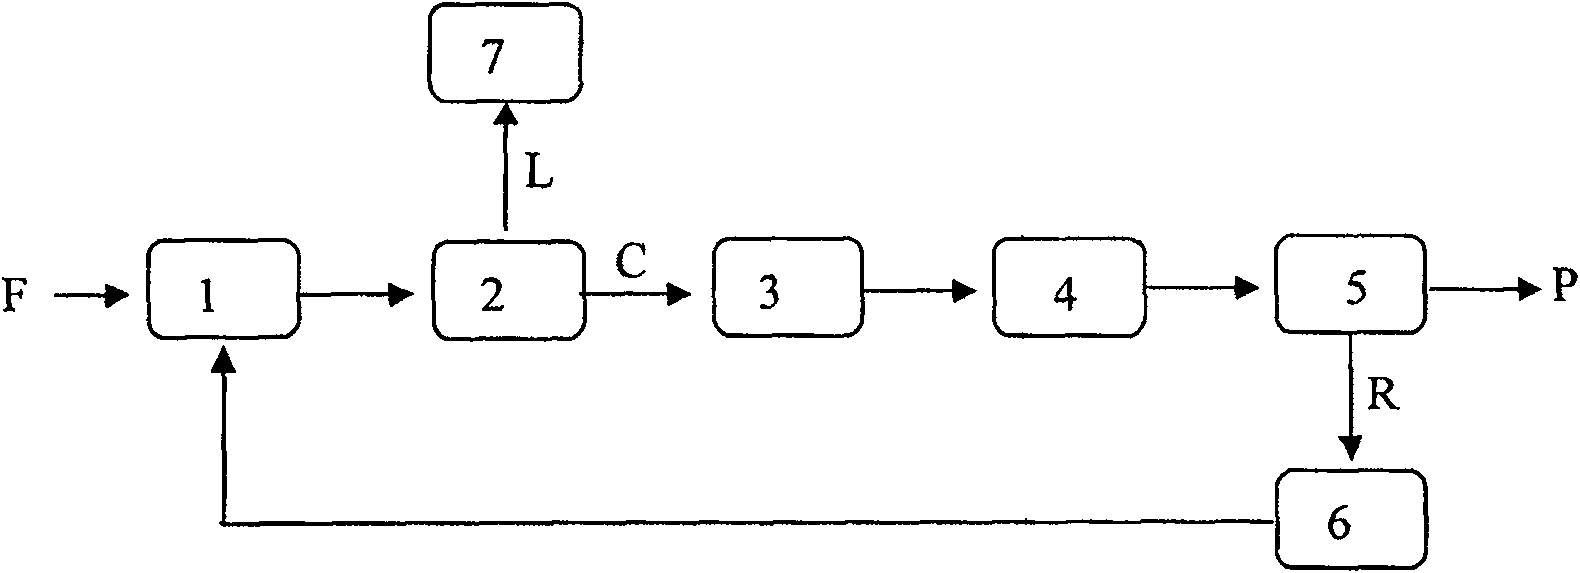 Method for producing electron-level phosphoric acid